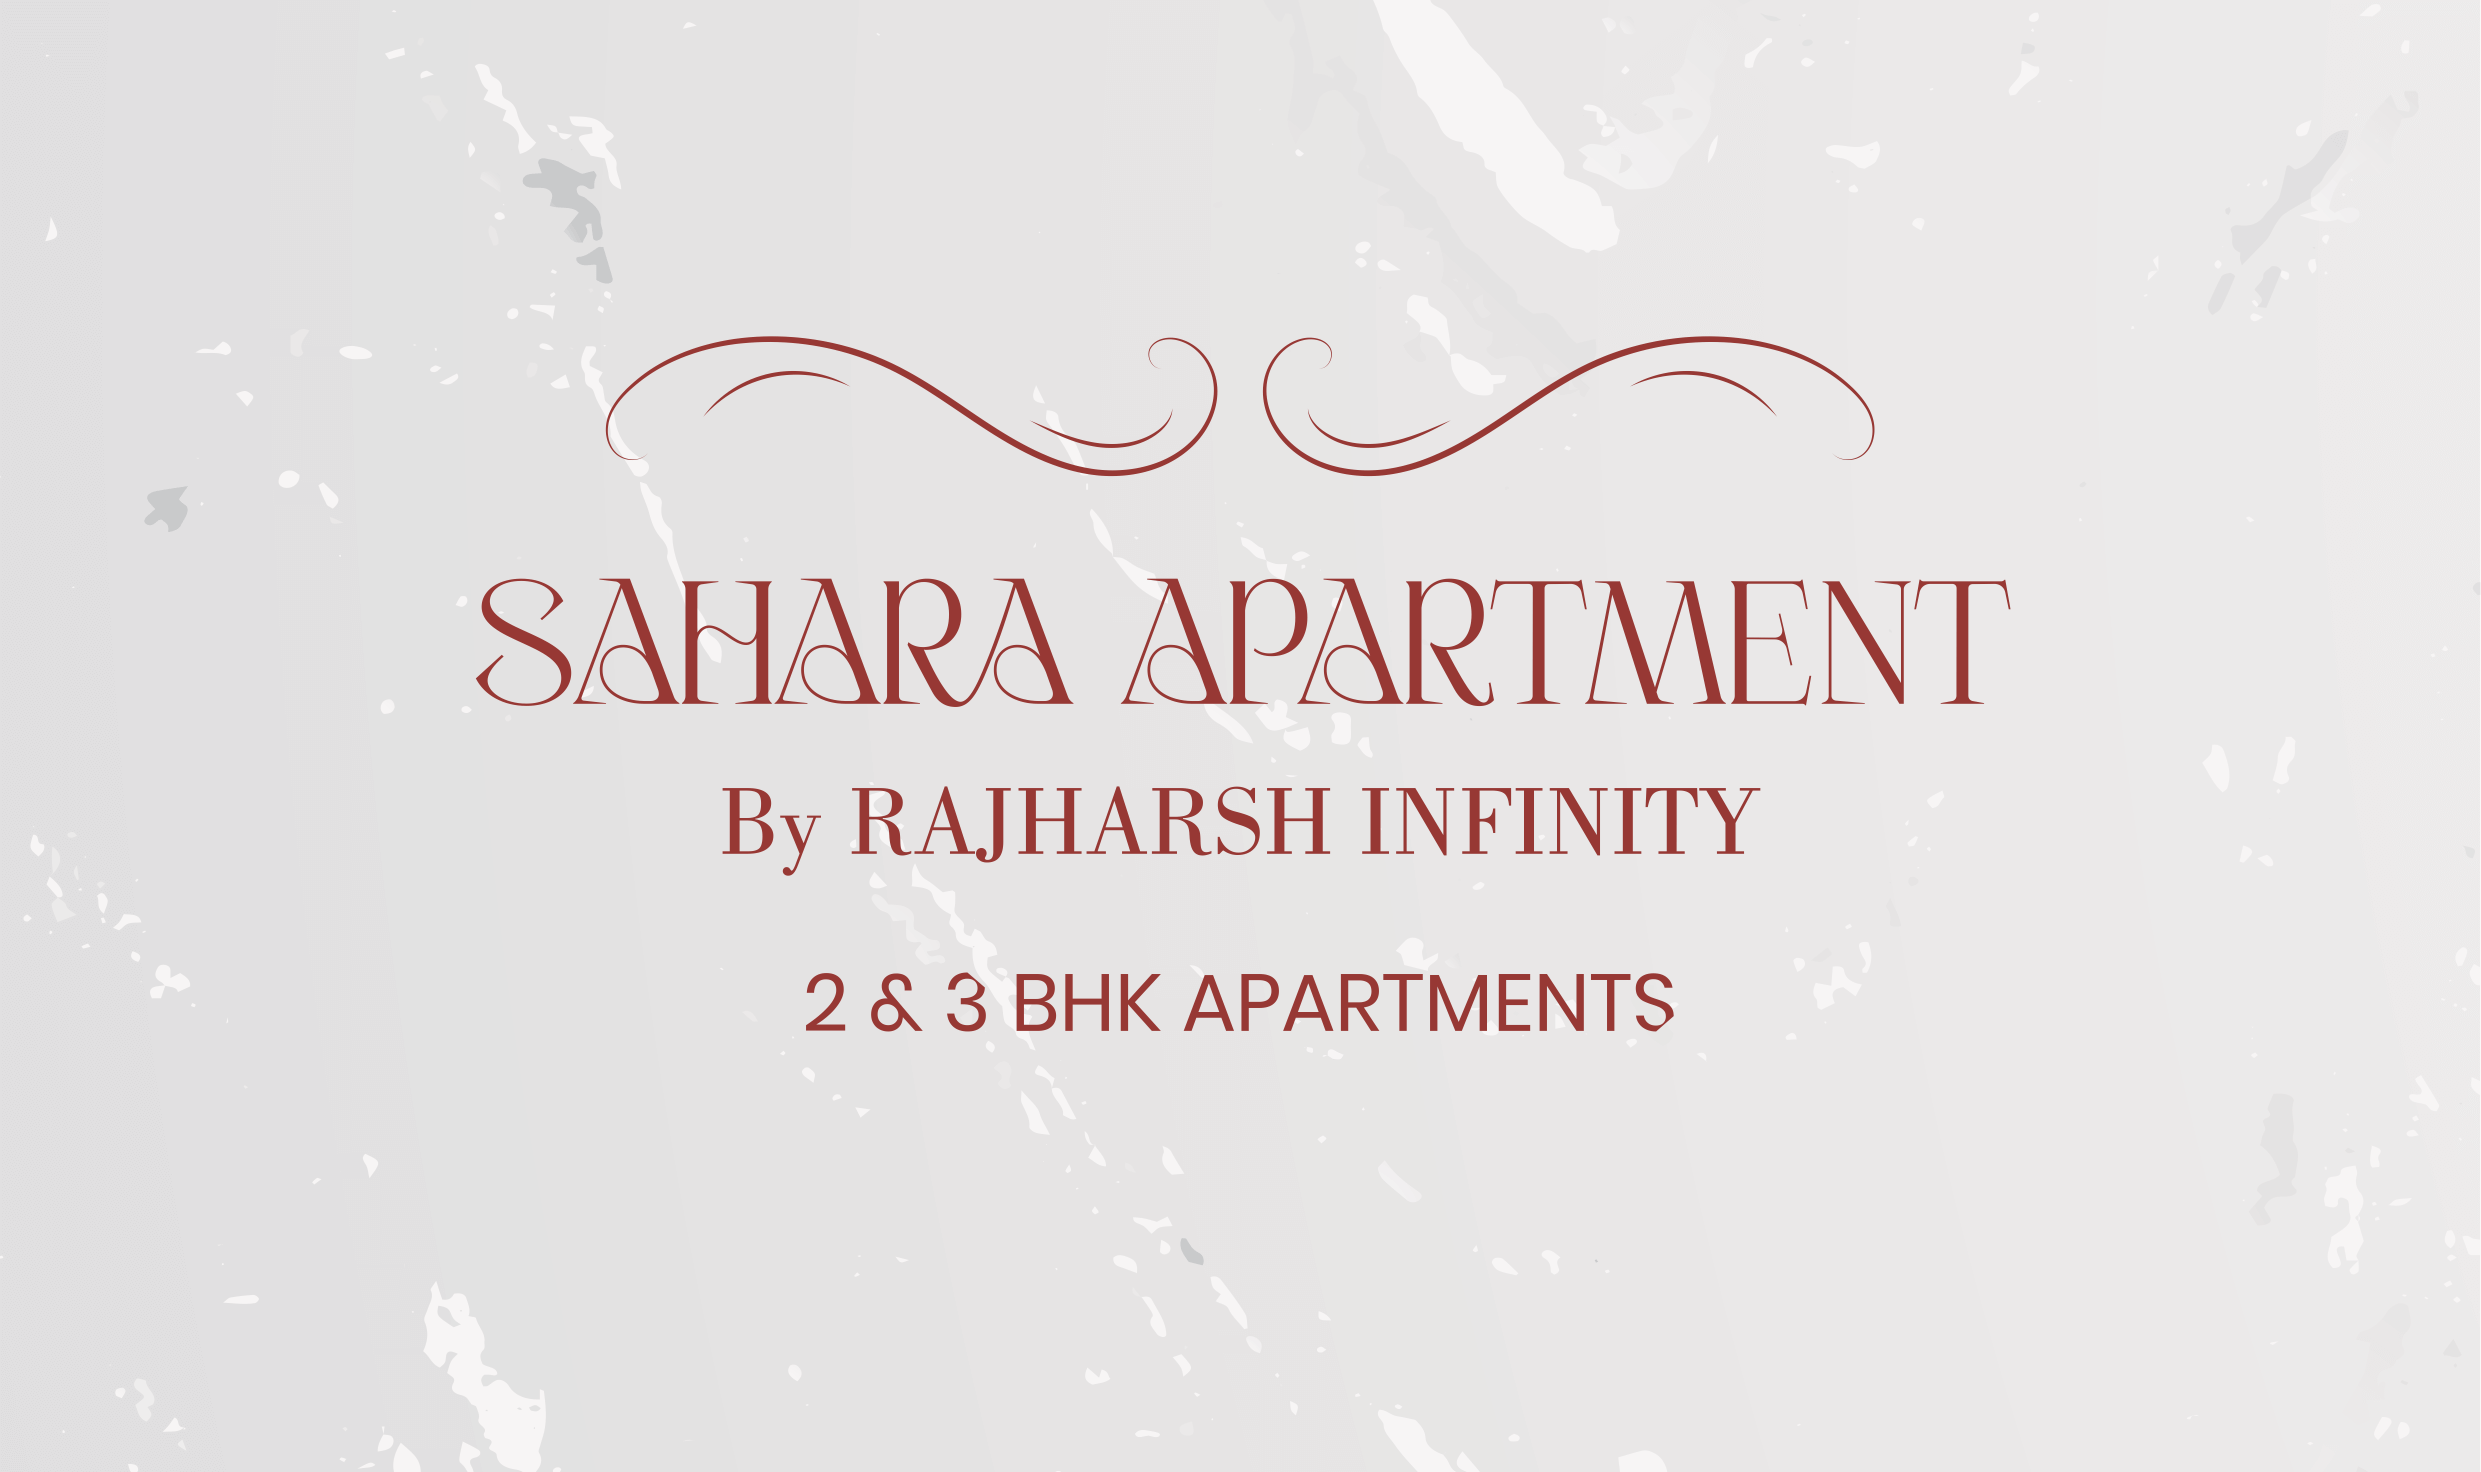 Sahara Apartment